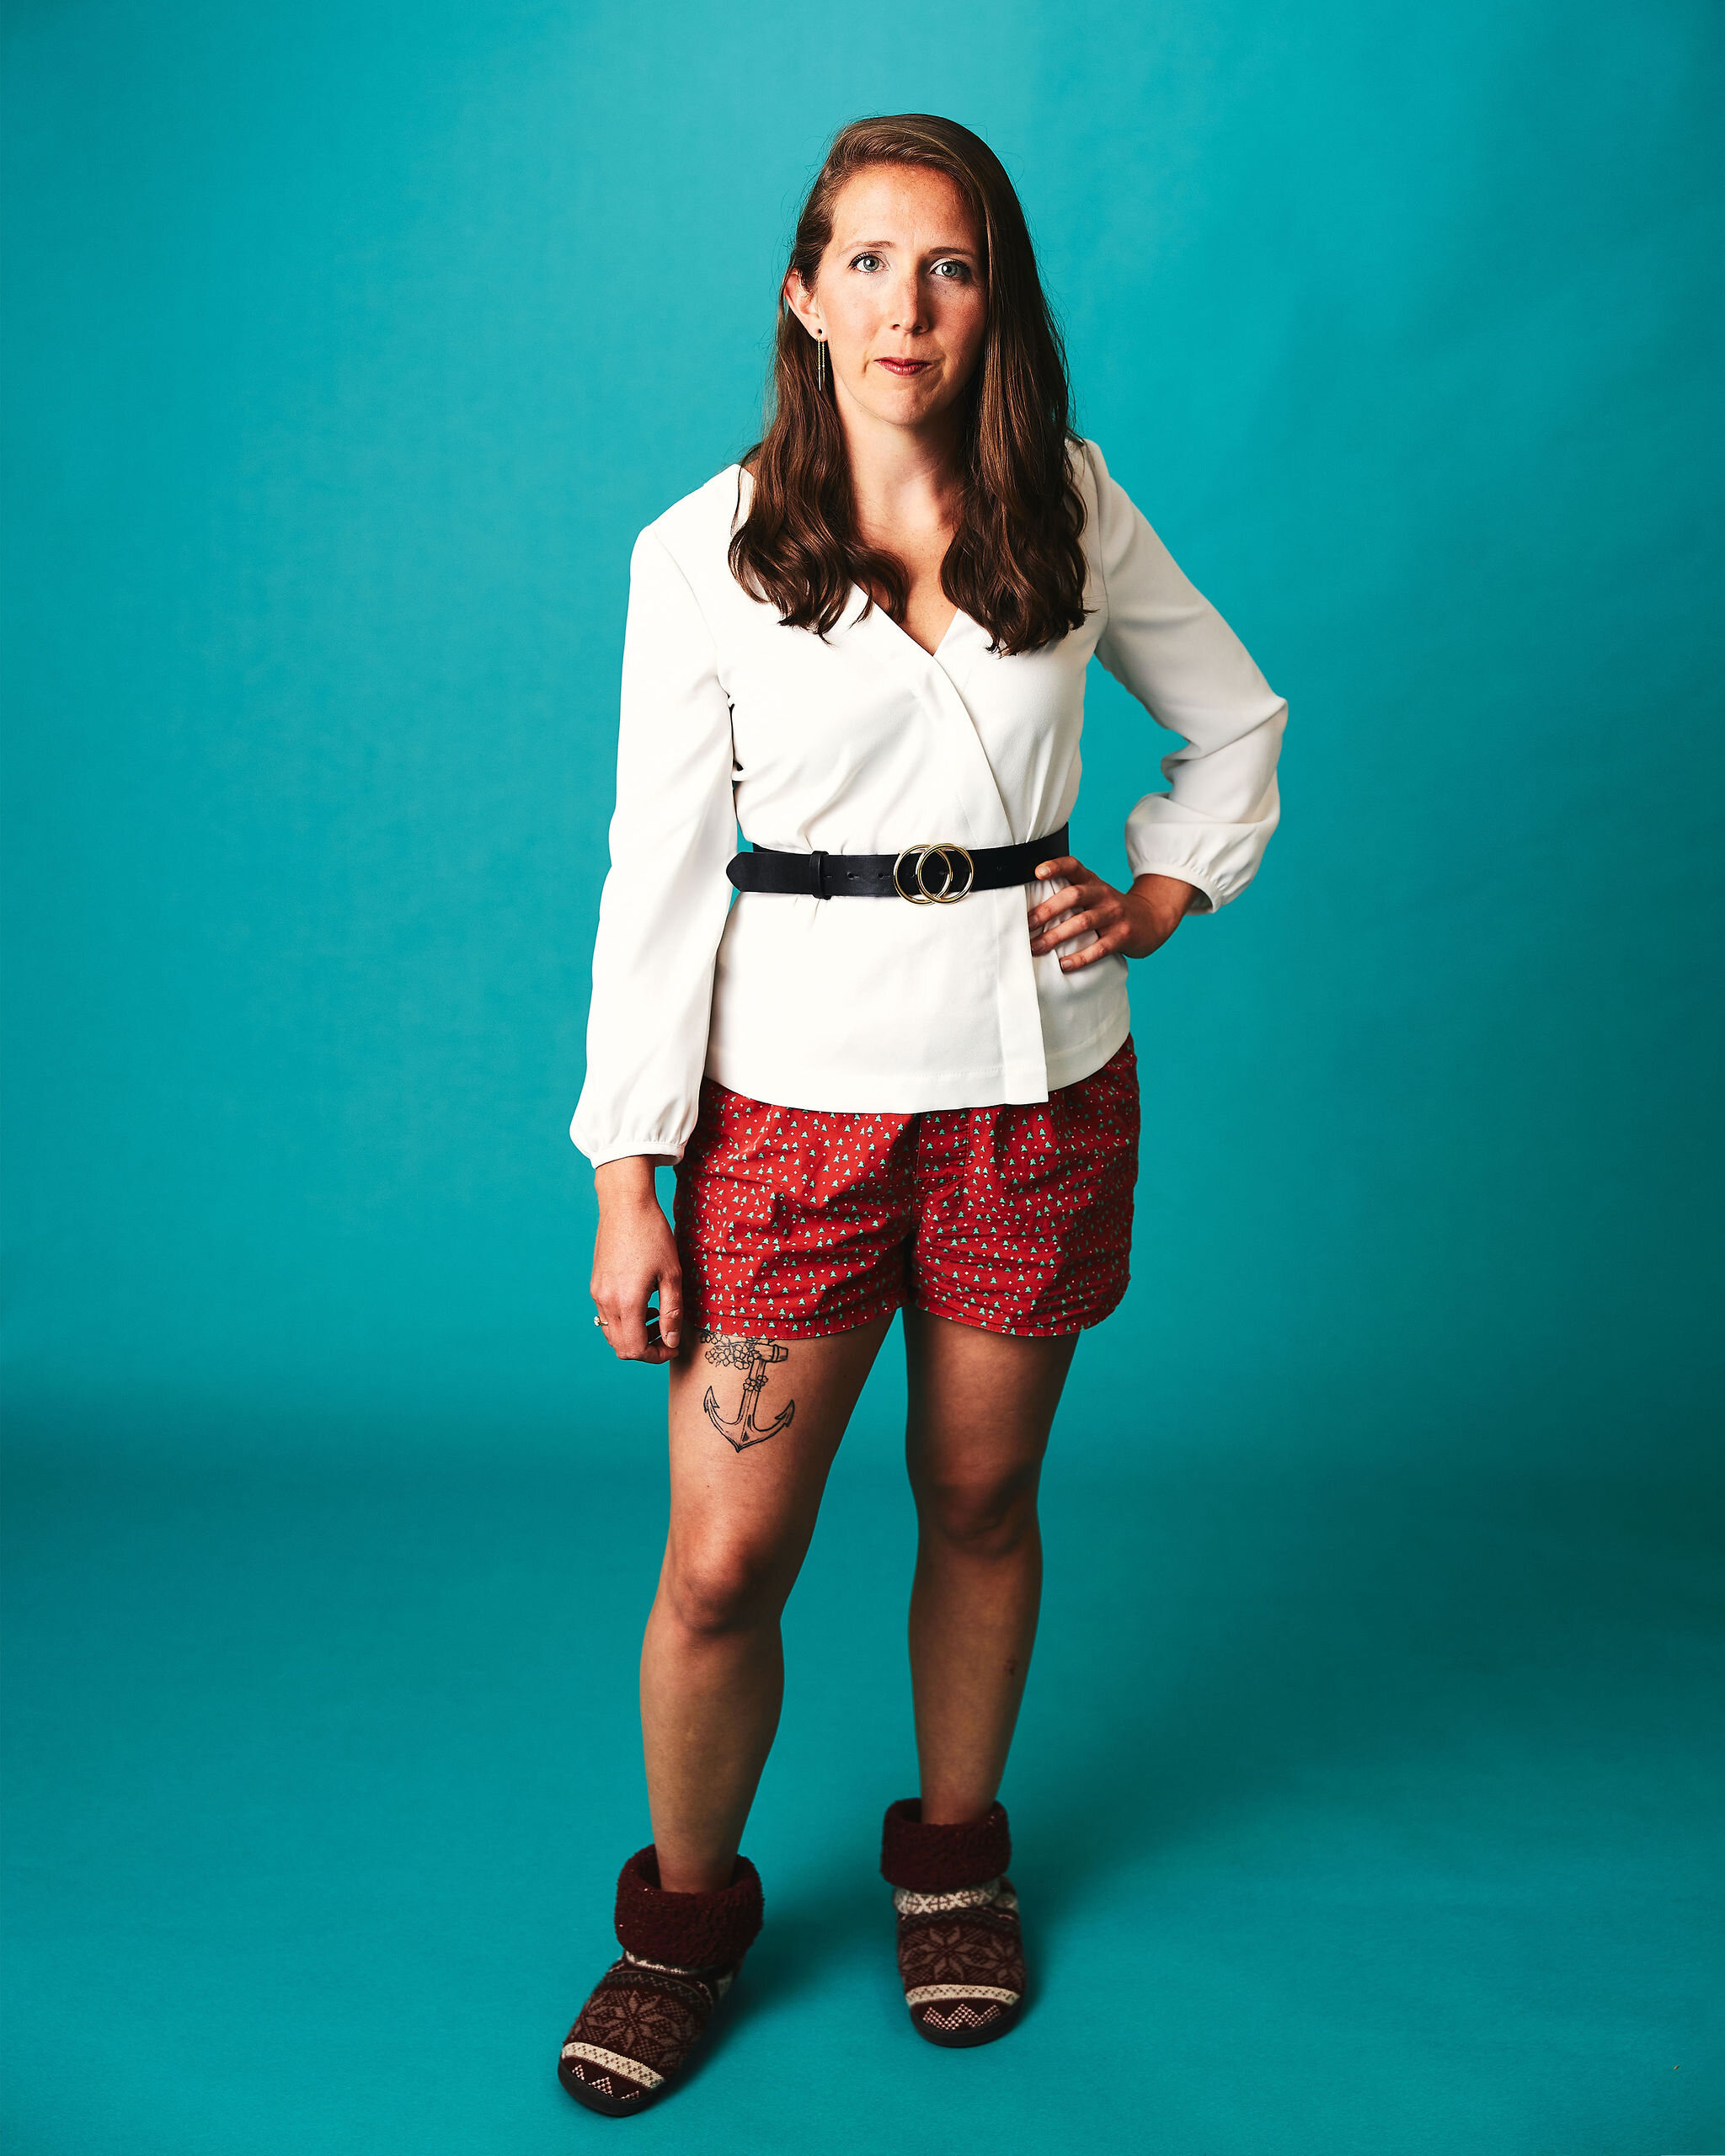 Meet Sarah Burke // COVIDwear